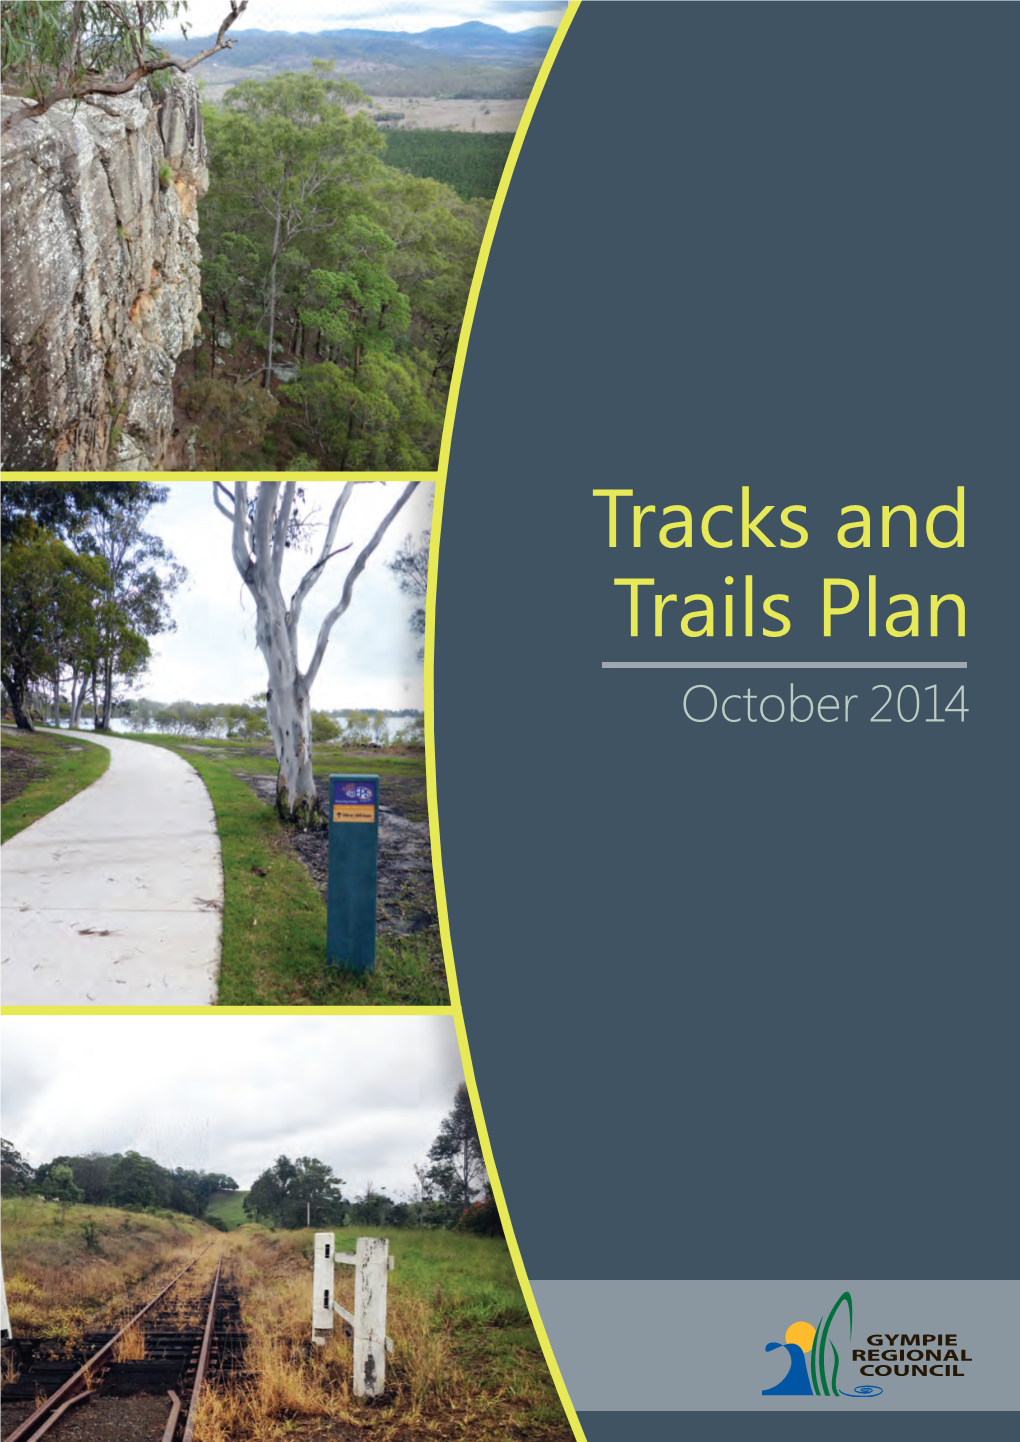 Tracks and Trails Plan (PDI022)